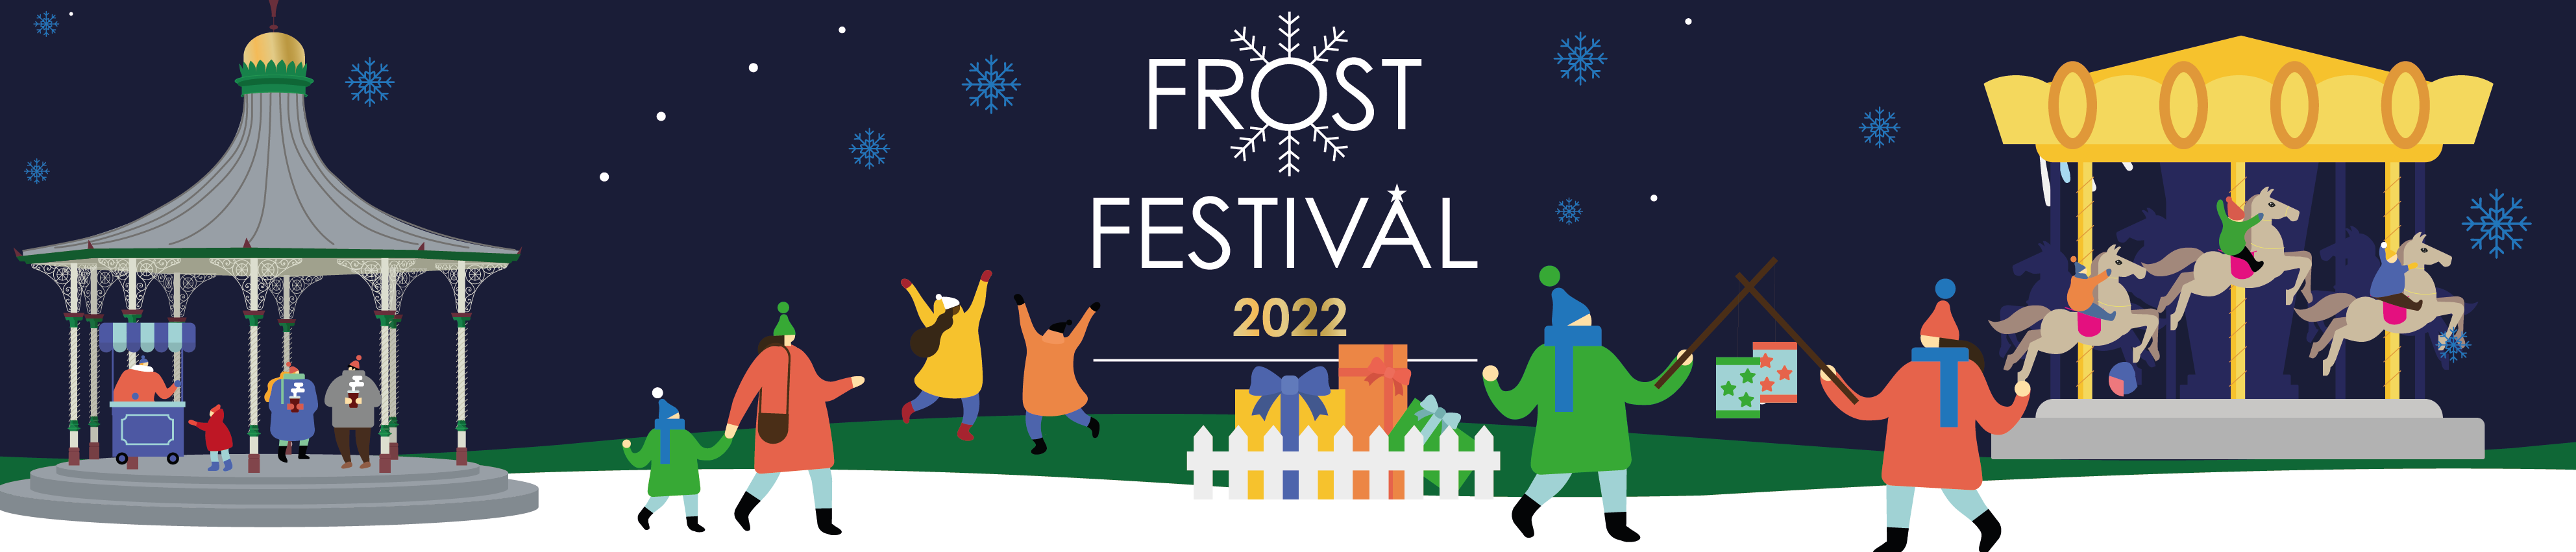 Frost fest 2022